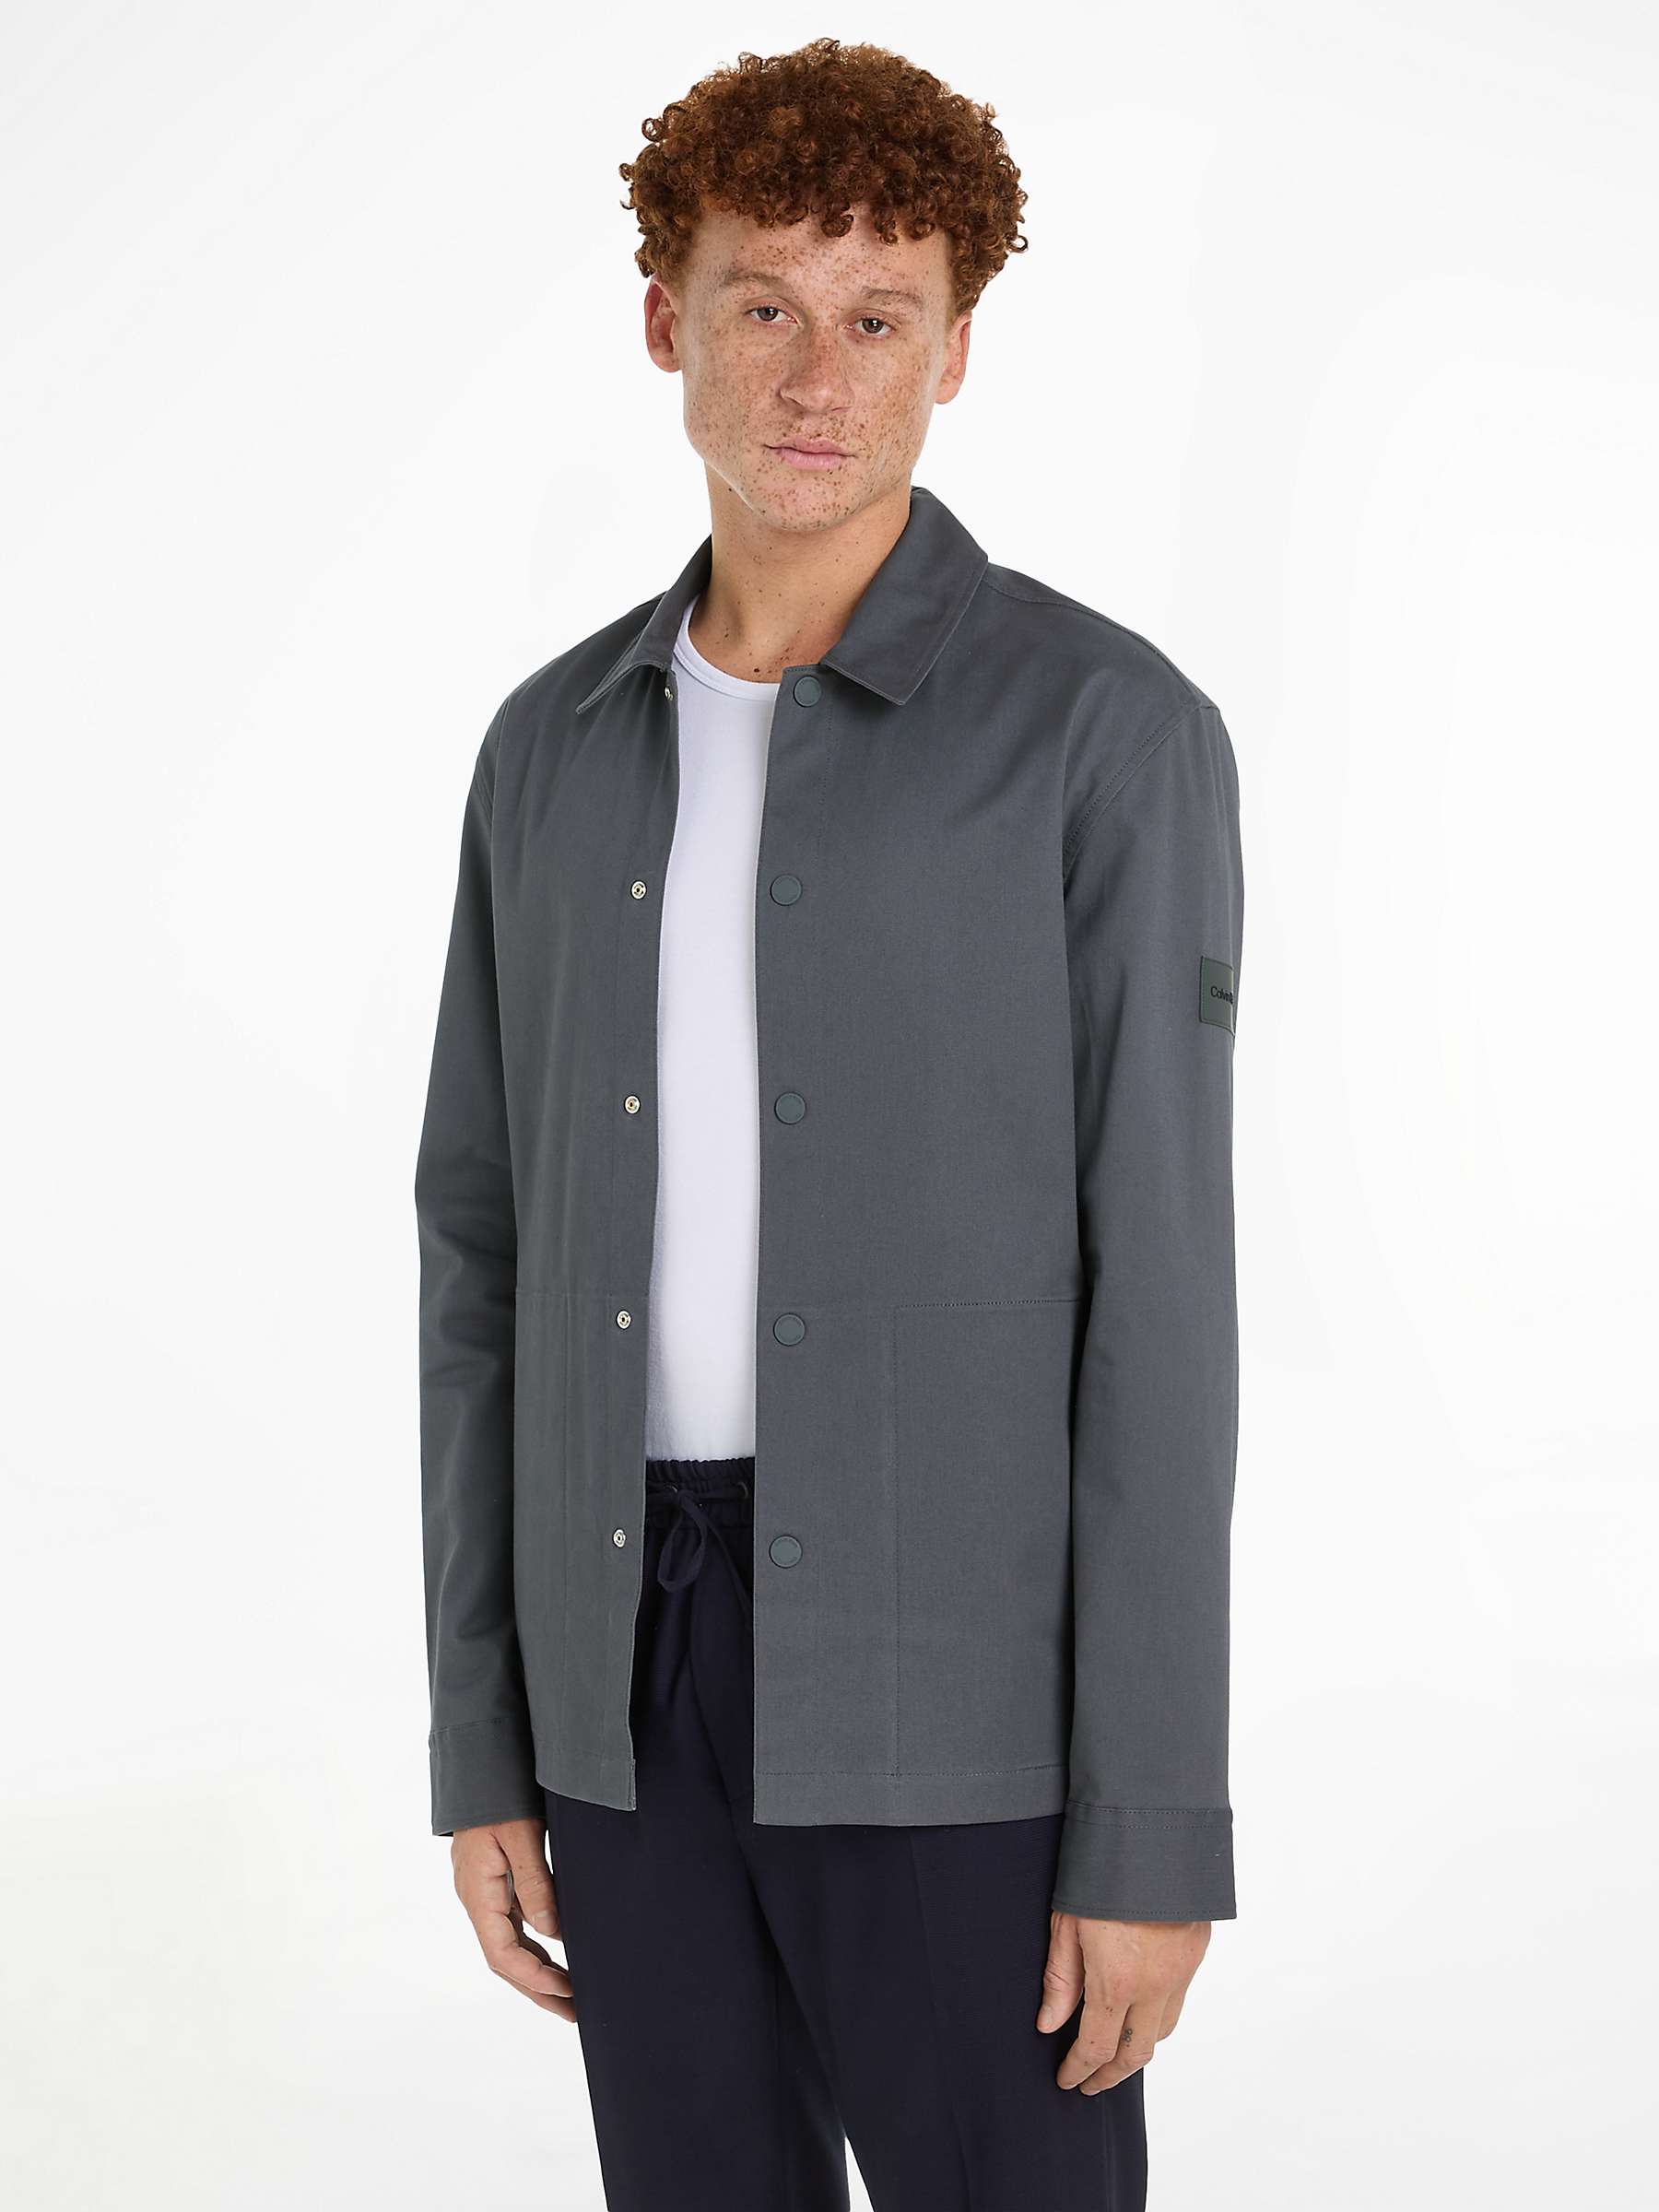 Buy Calvin Klein Modern Twill Overshirt, Grey Online at johnlewis.com